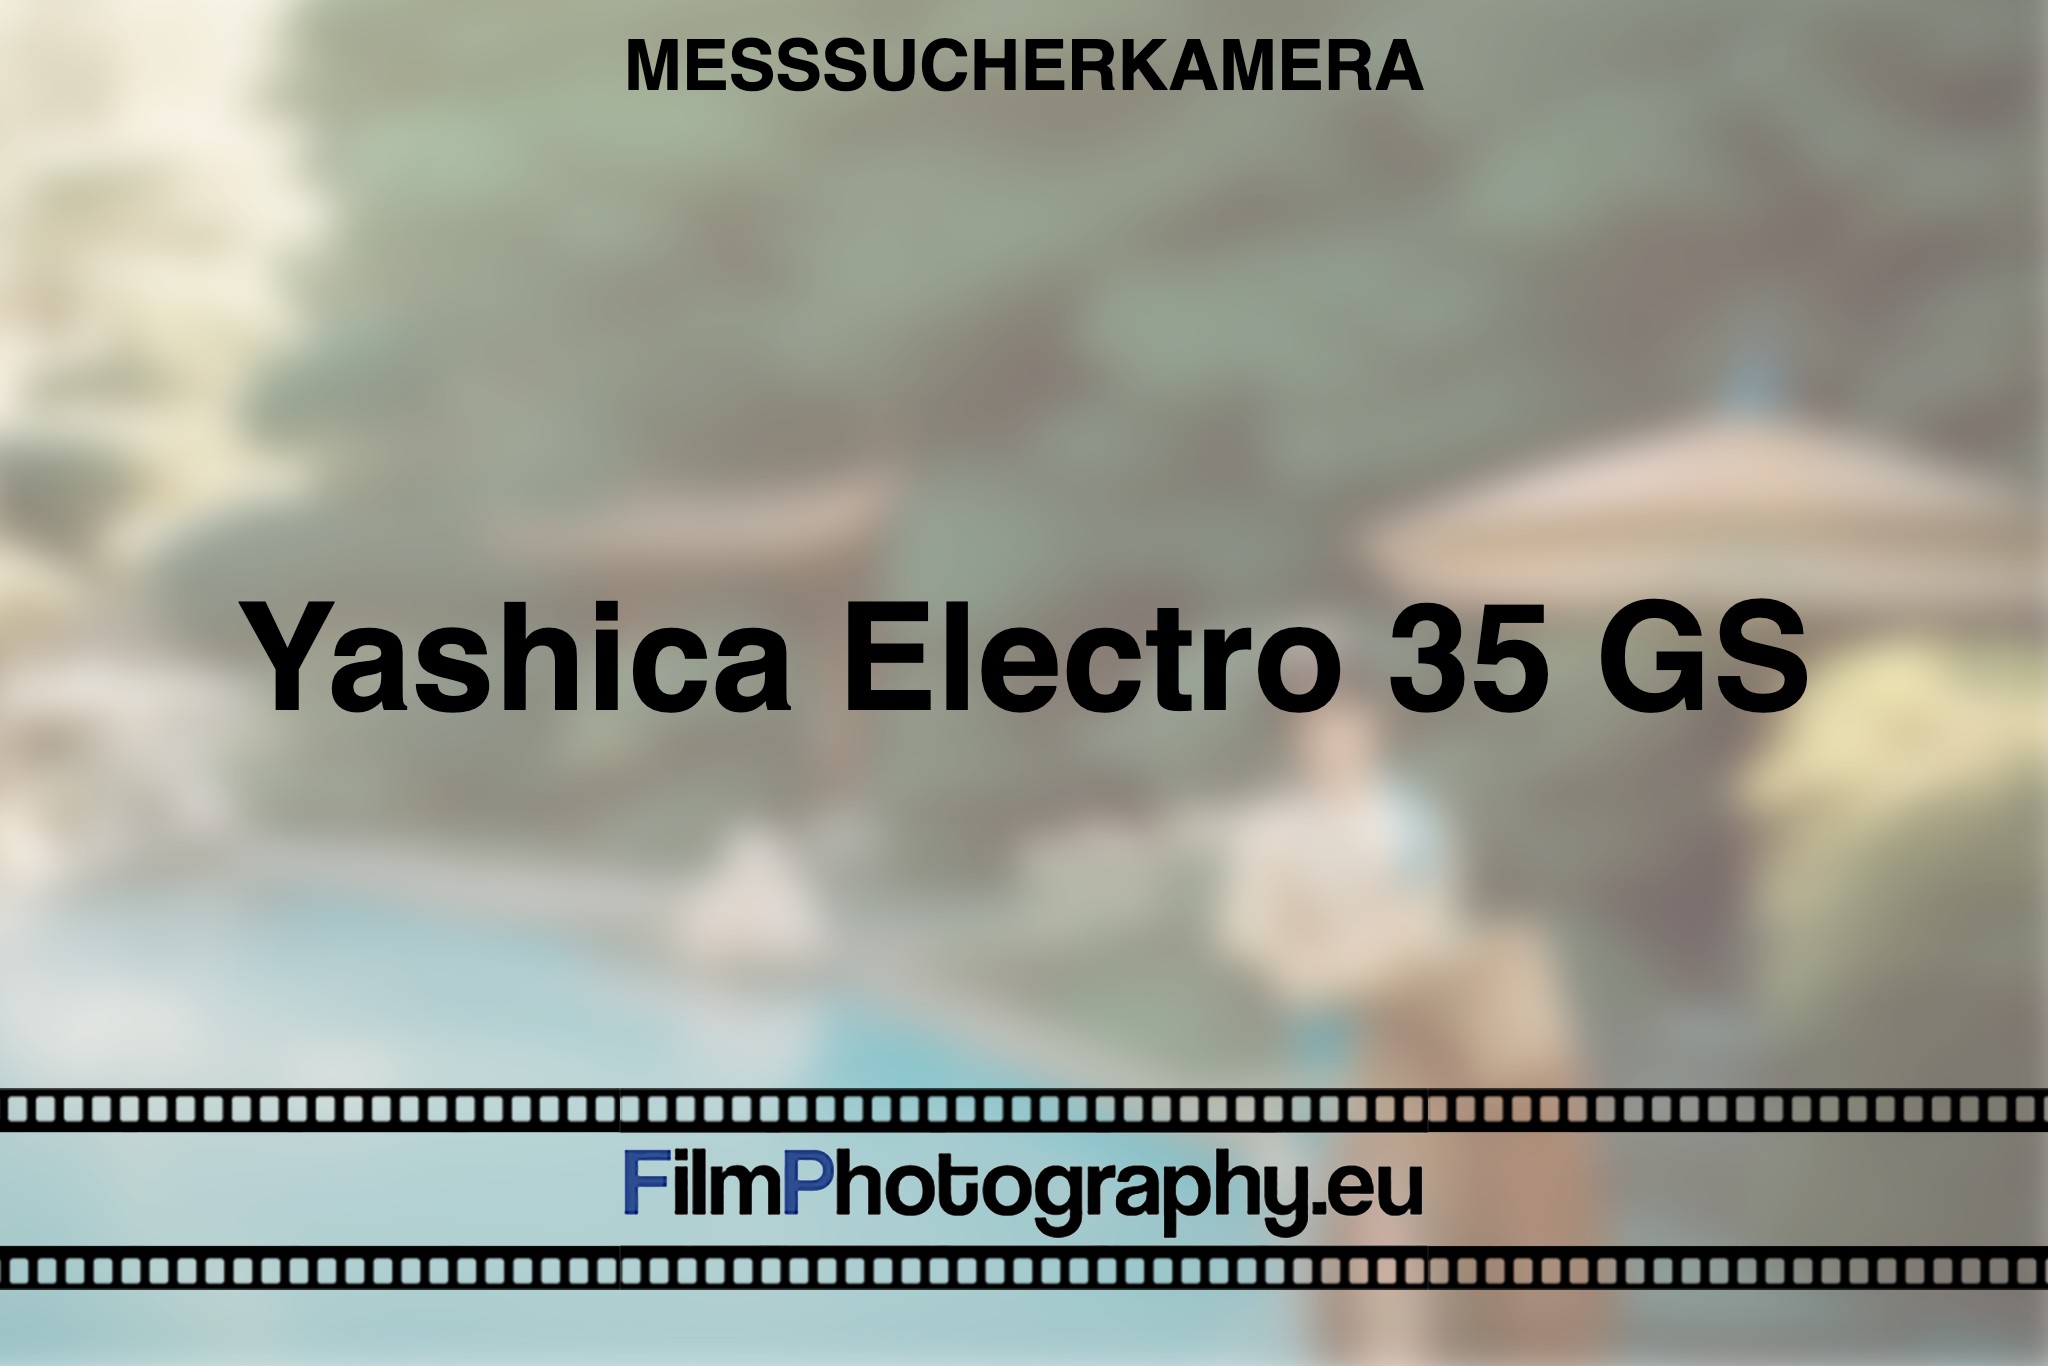 yashica-electro-35-gs-messsucherkamera-bnv